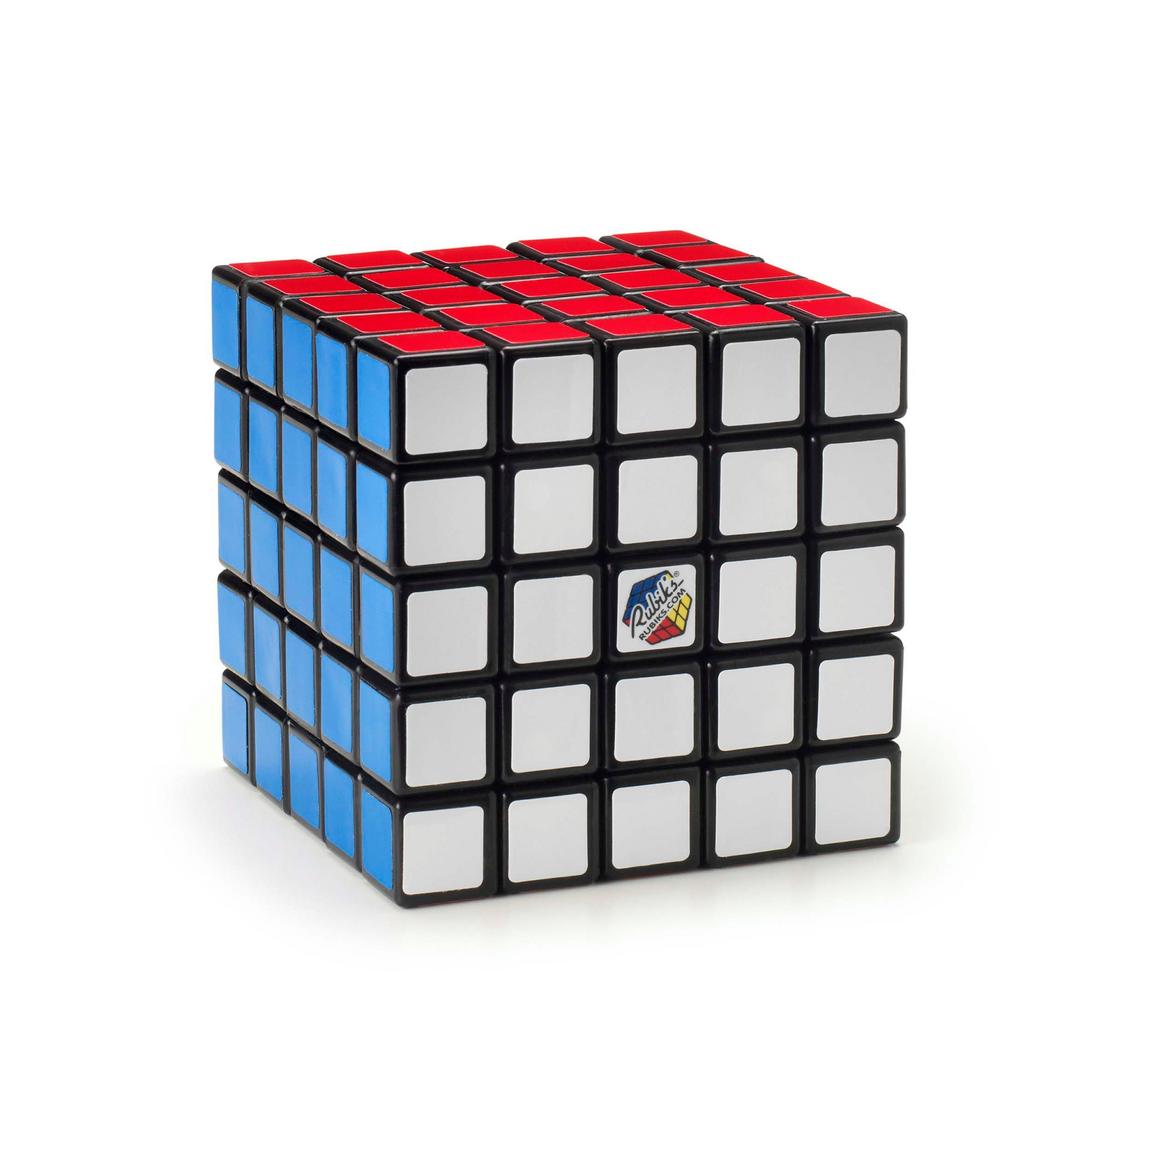 Spin Master Rubik's Professor 5x5 Cube